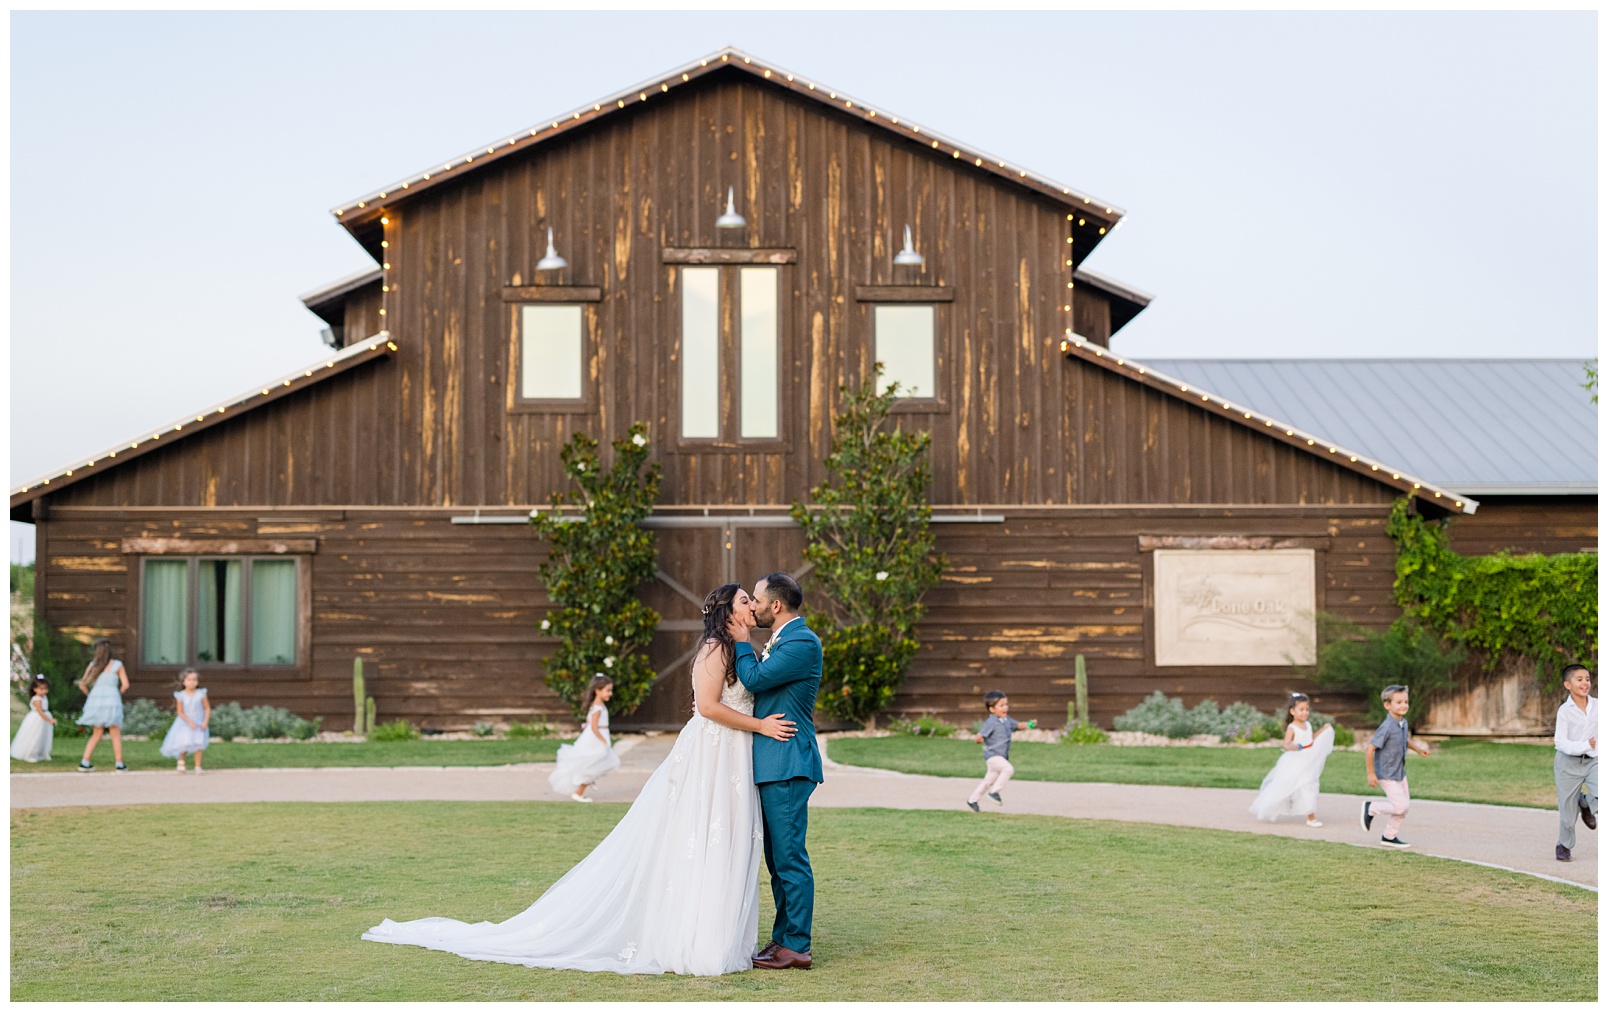 Lone Oak Barn Wedding Venue in Round Rock, Texas